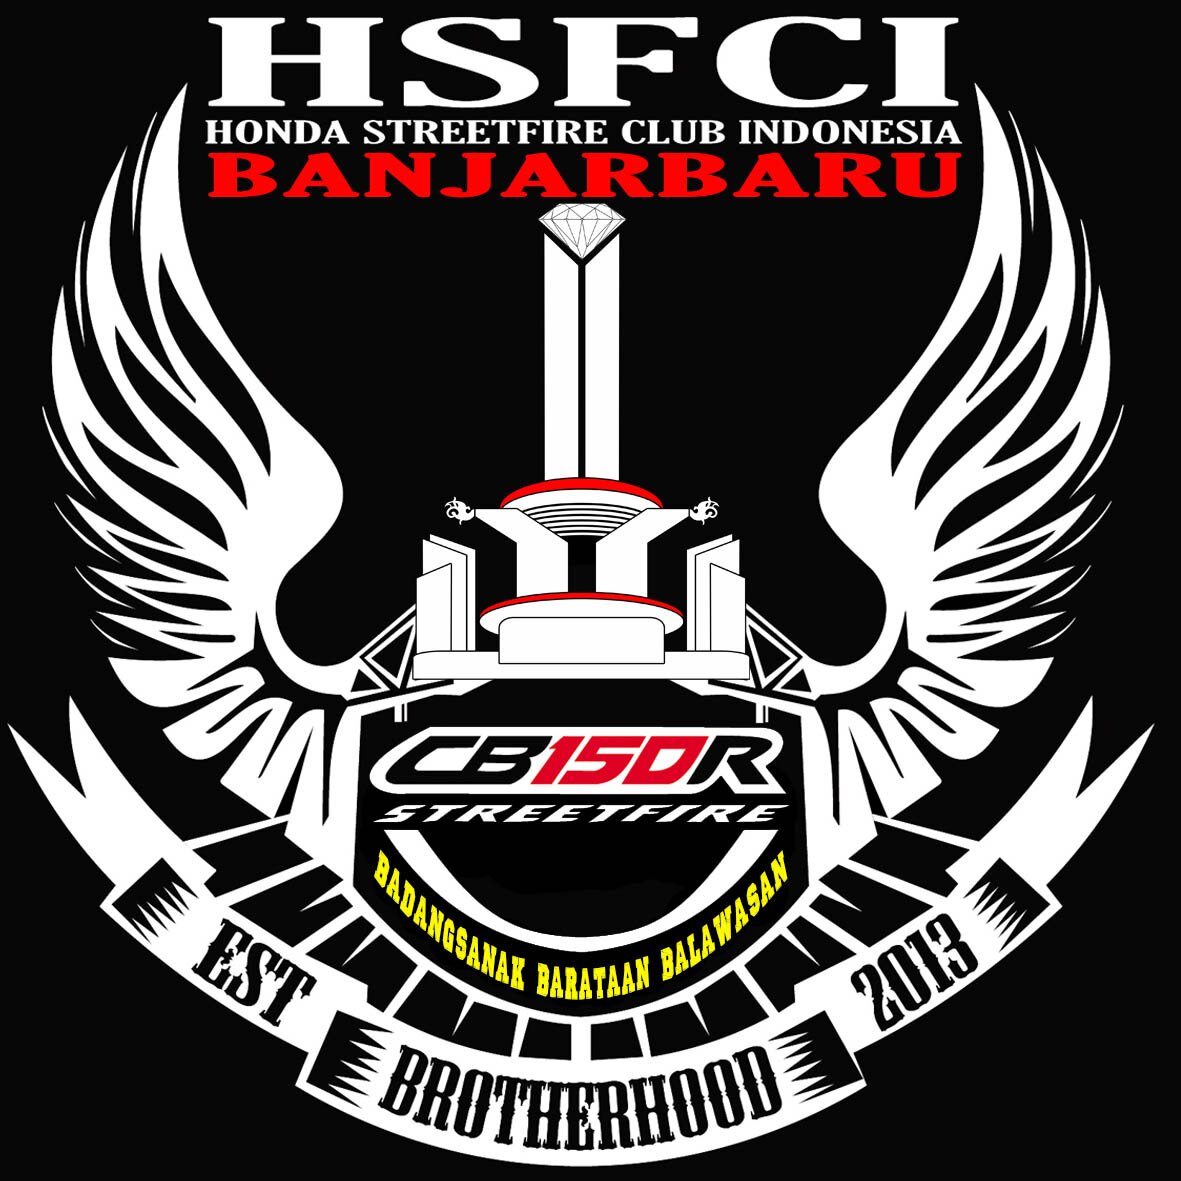 HSFCI Banjarbaru
Kopdar : Hobbies Mingguraya, Banjarbaru tiap malam Minggu jam 20.00 s/d selesai